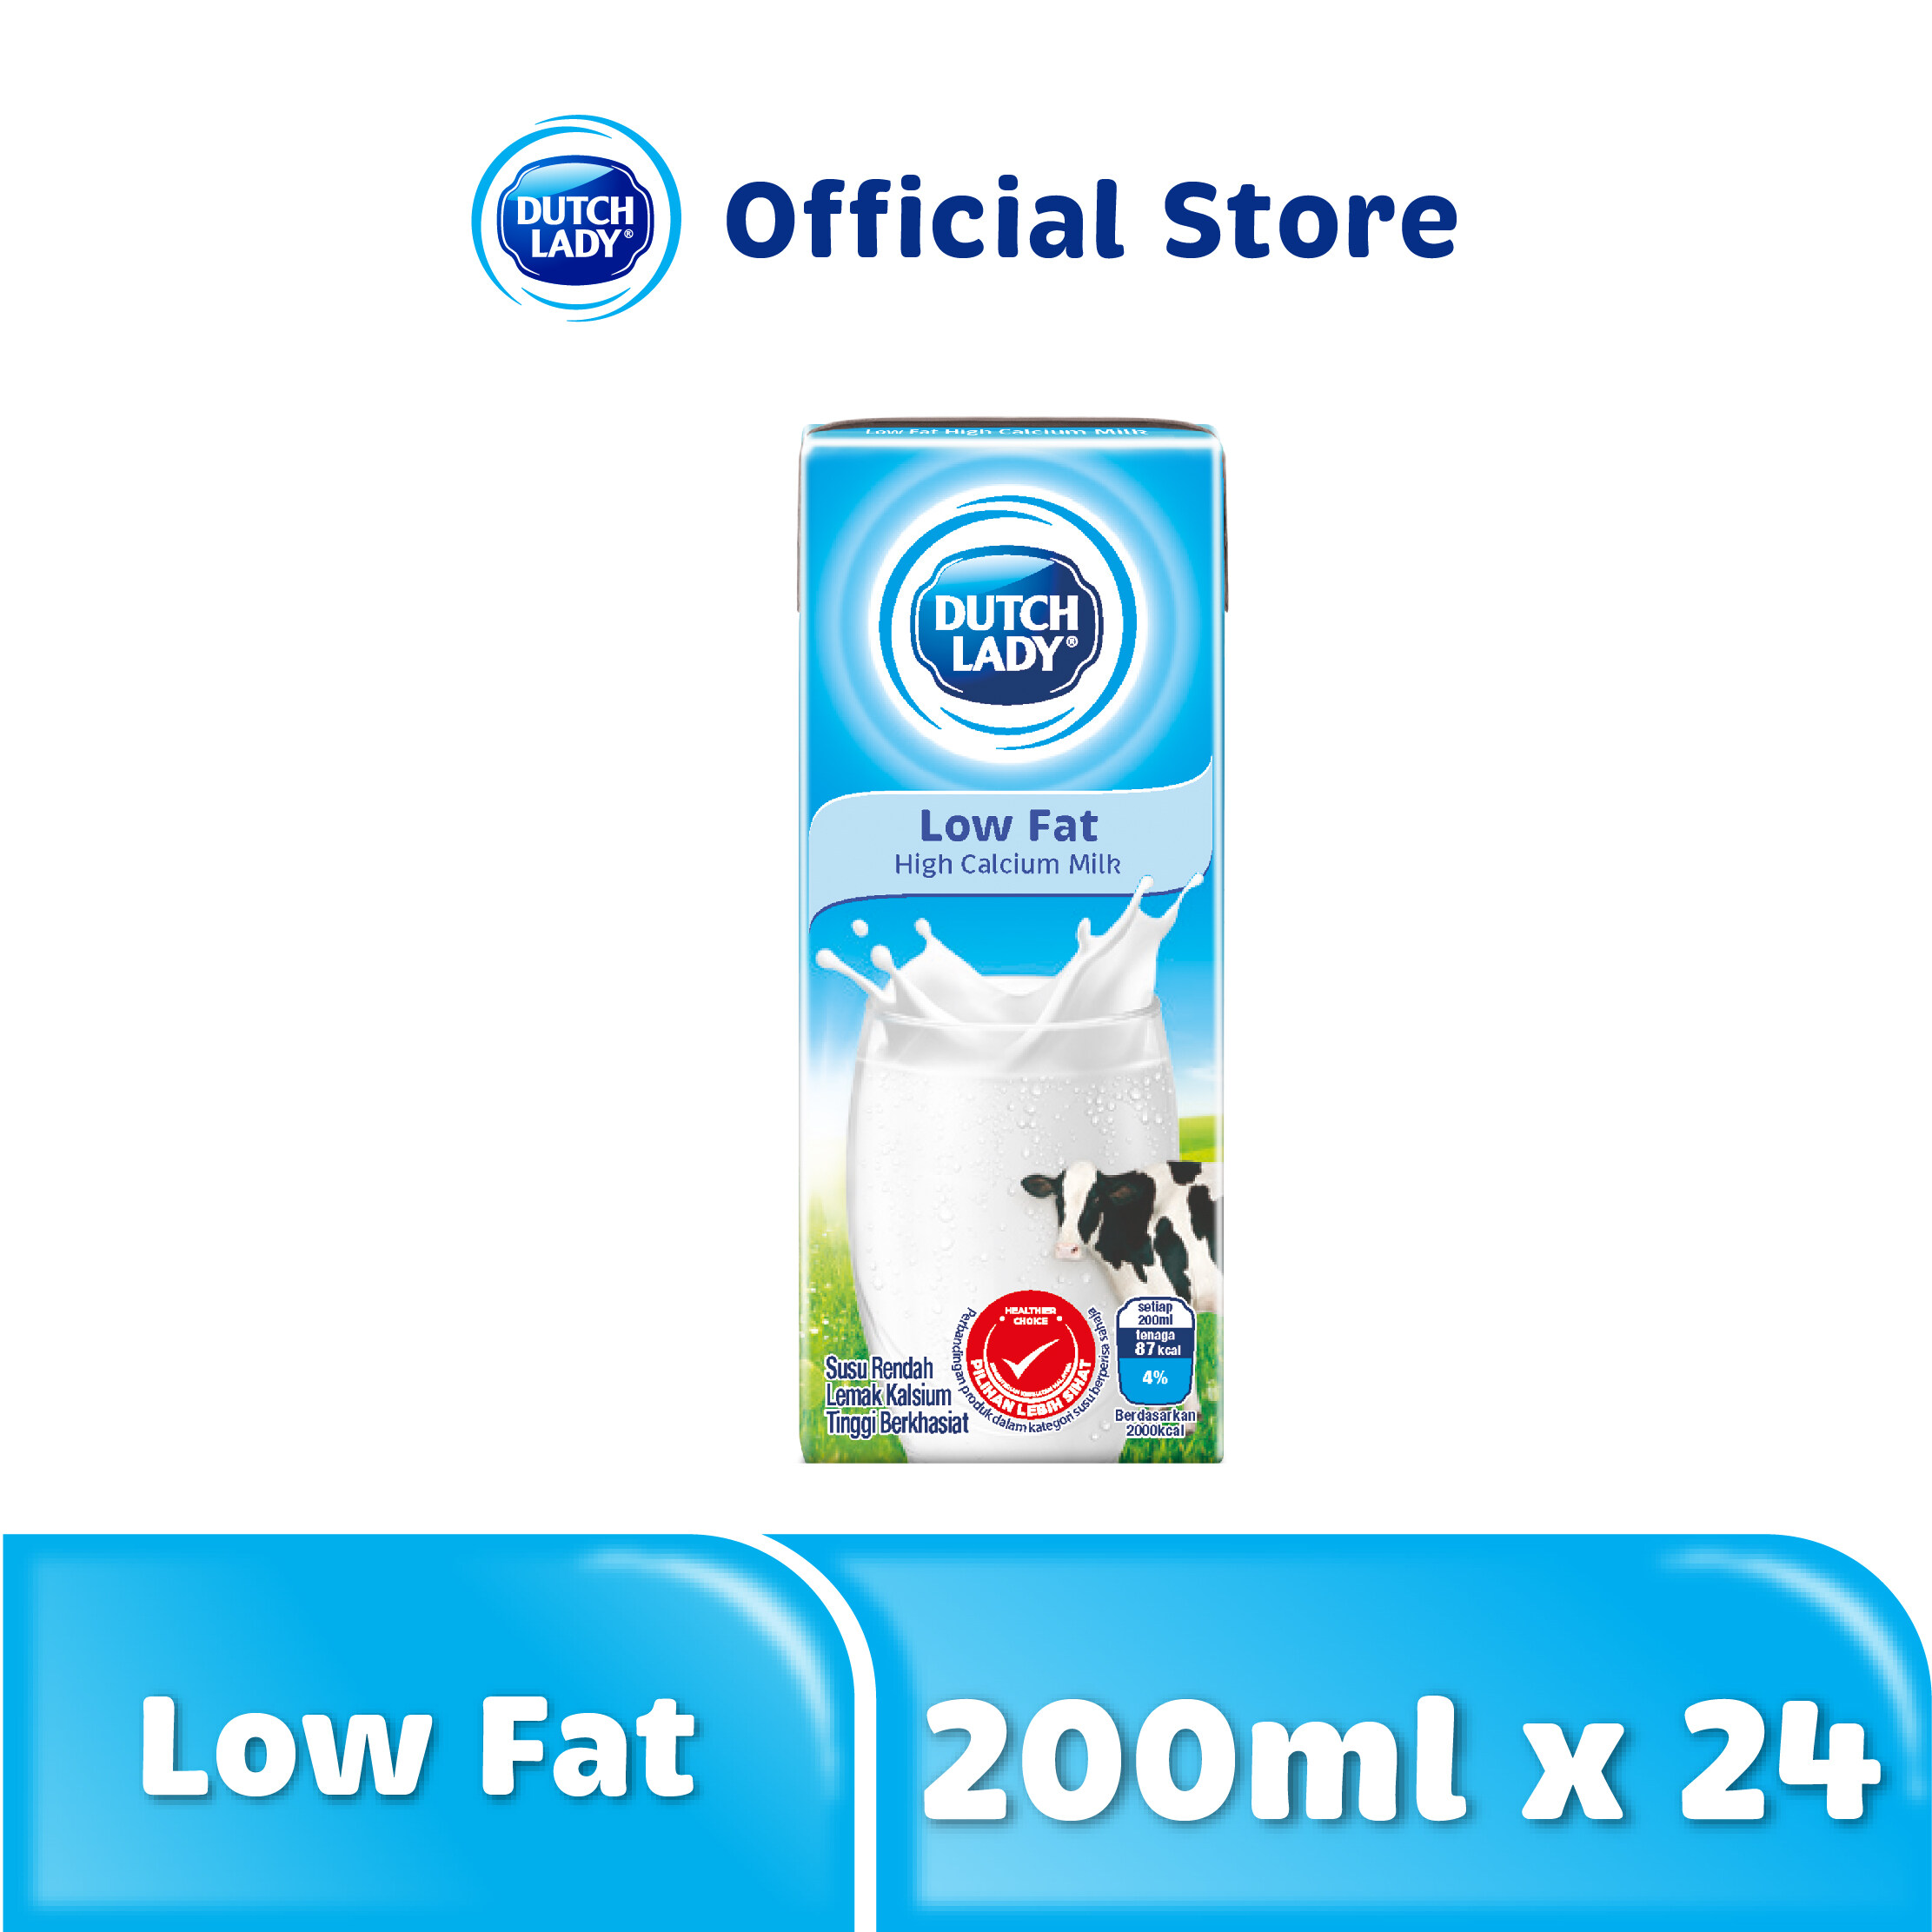 Lady low fat milk dutch dutch lady